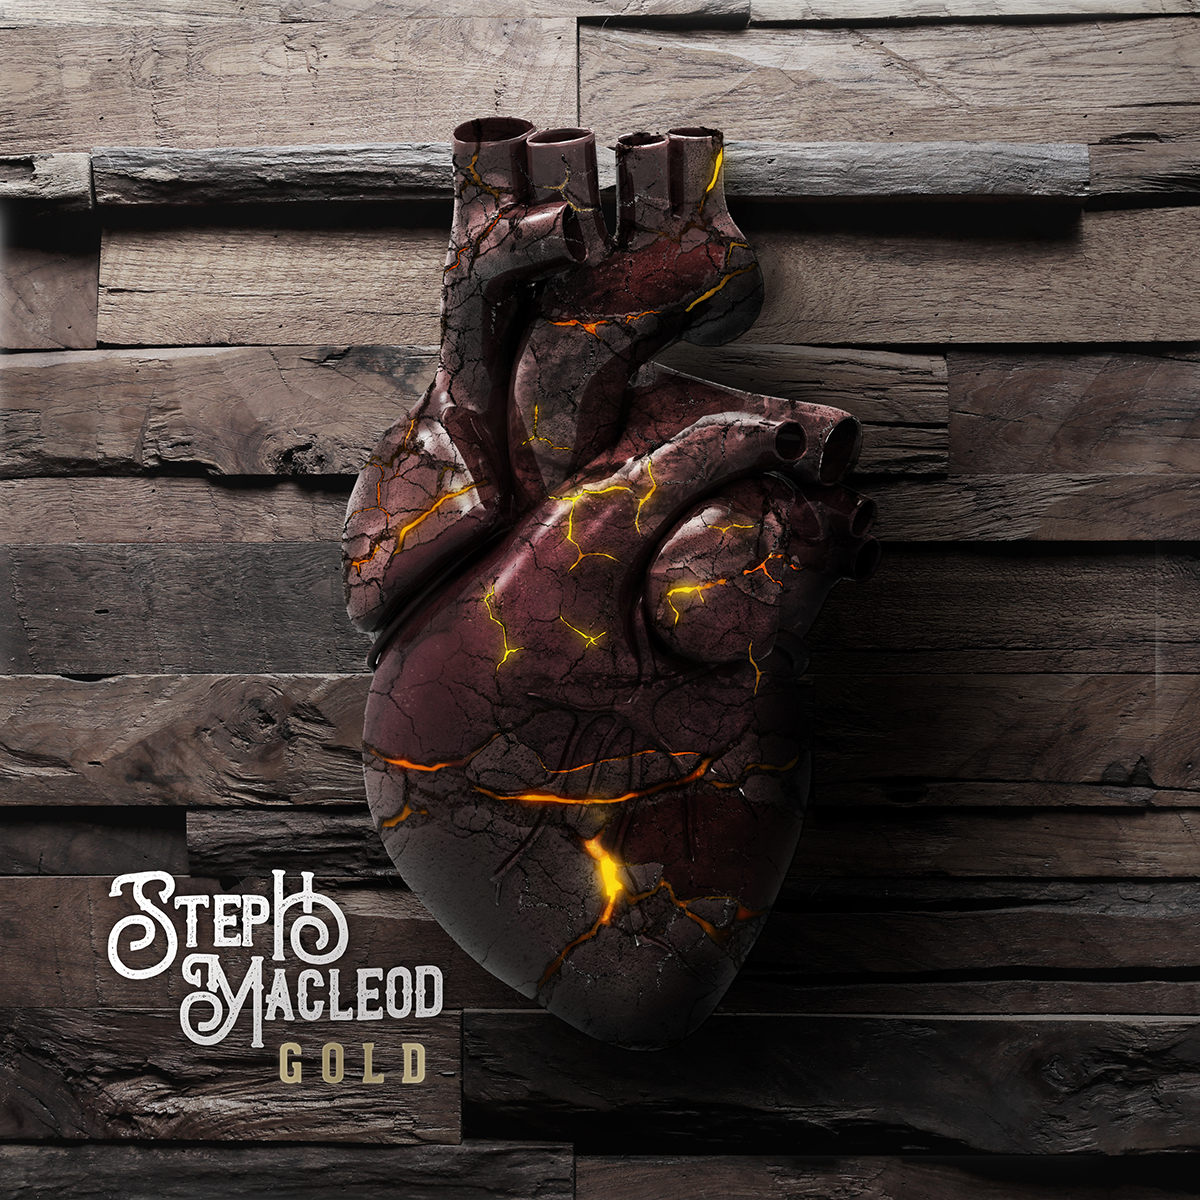 Steph Macleod - New Album - Gold